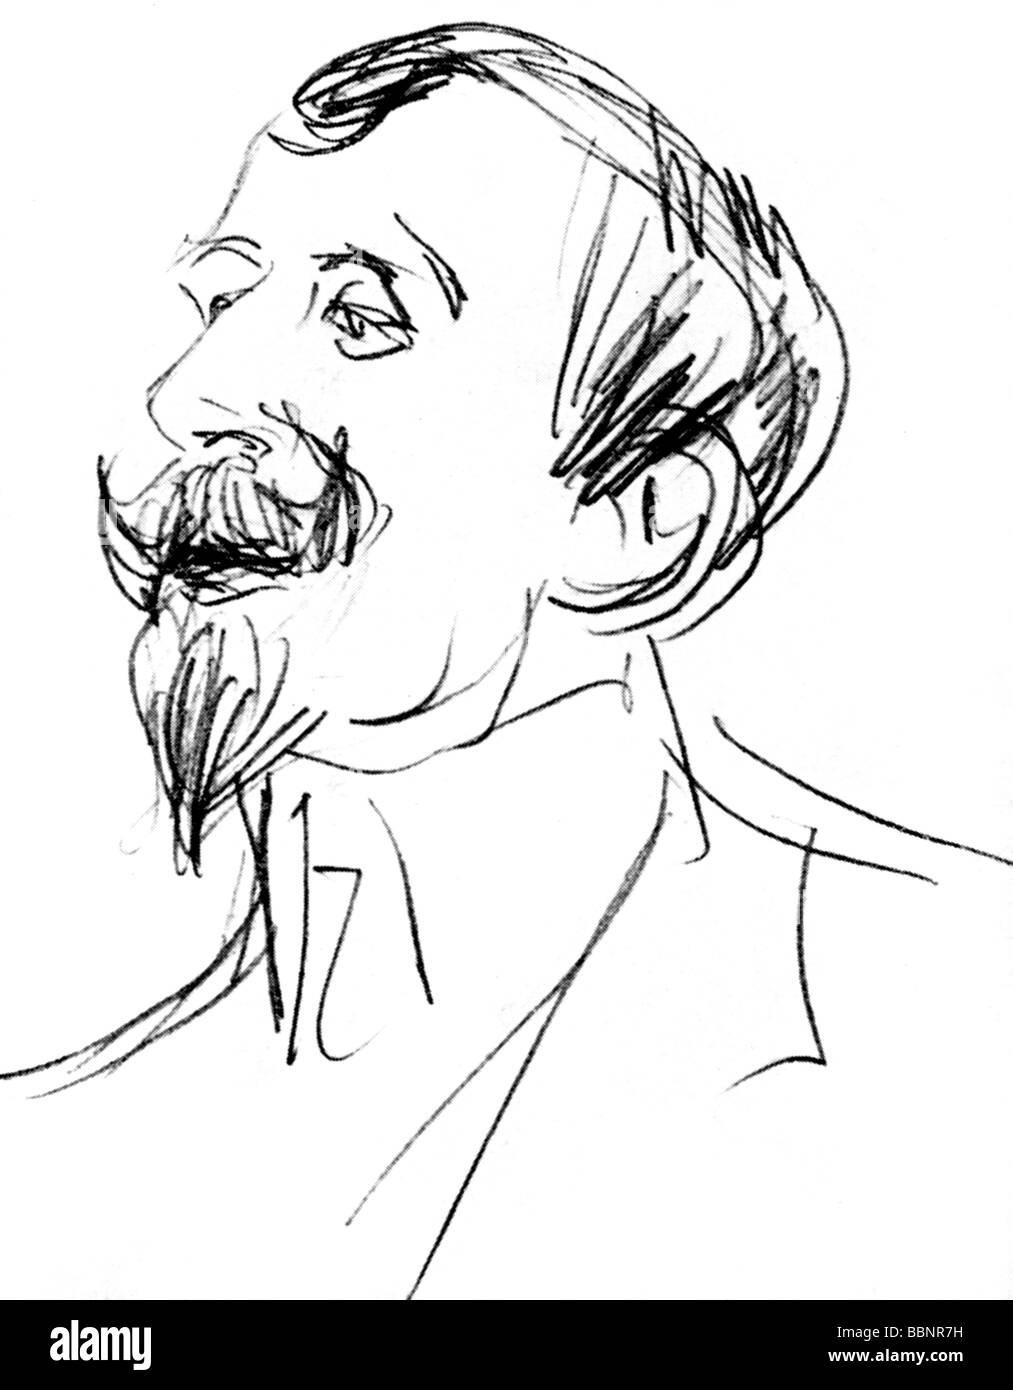 Mann, Heinrich, 27.3.1871 - 12.3.1950, German author / writer, self-portrait, pencil drawing, circa 1905, Stock Photo